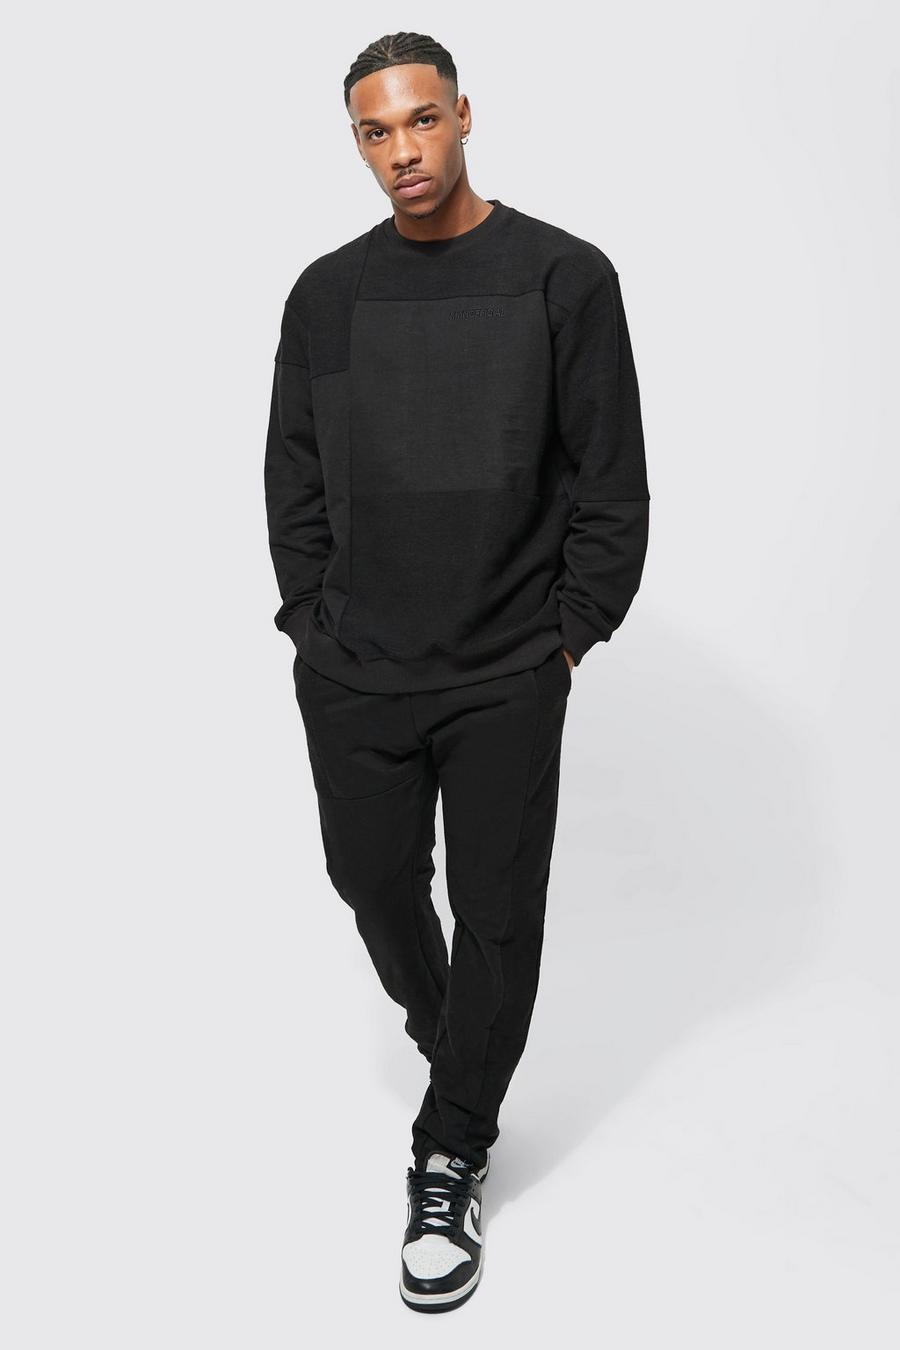 Black negro Oversized Man Patchwork Sweater Tracksuit 